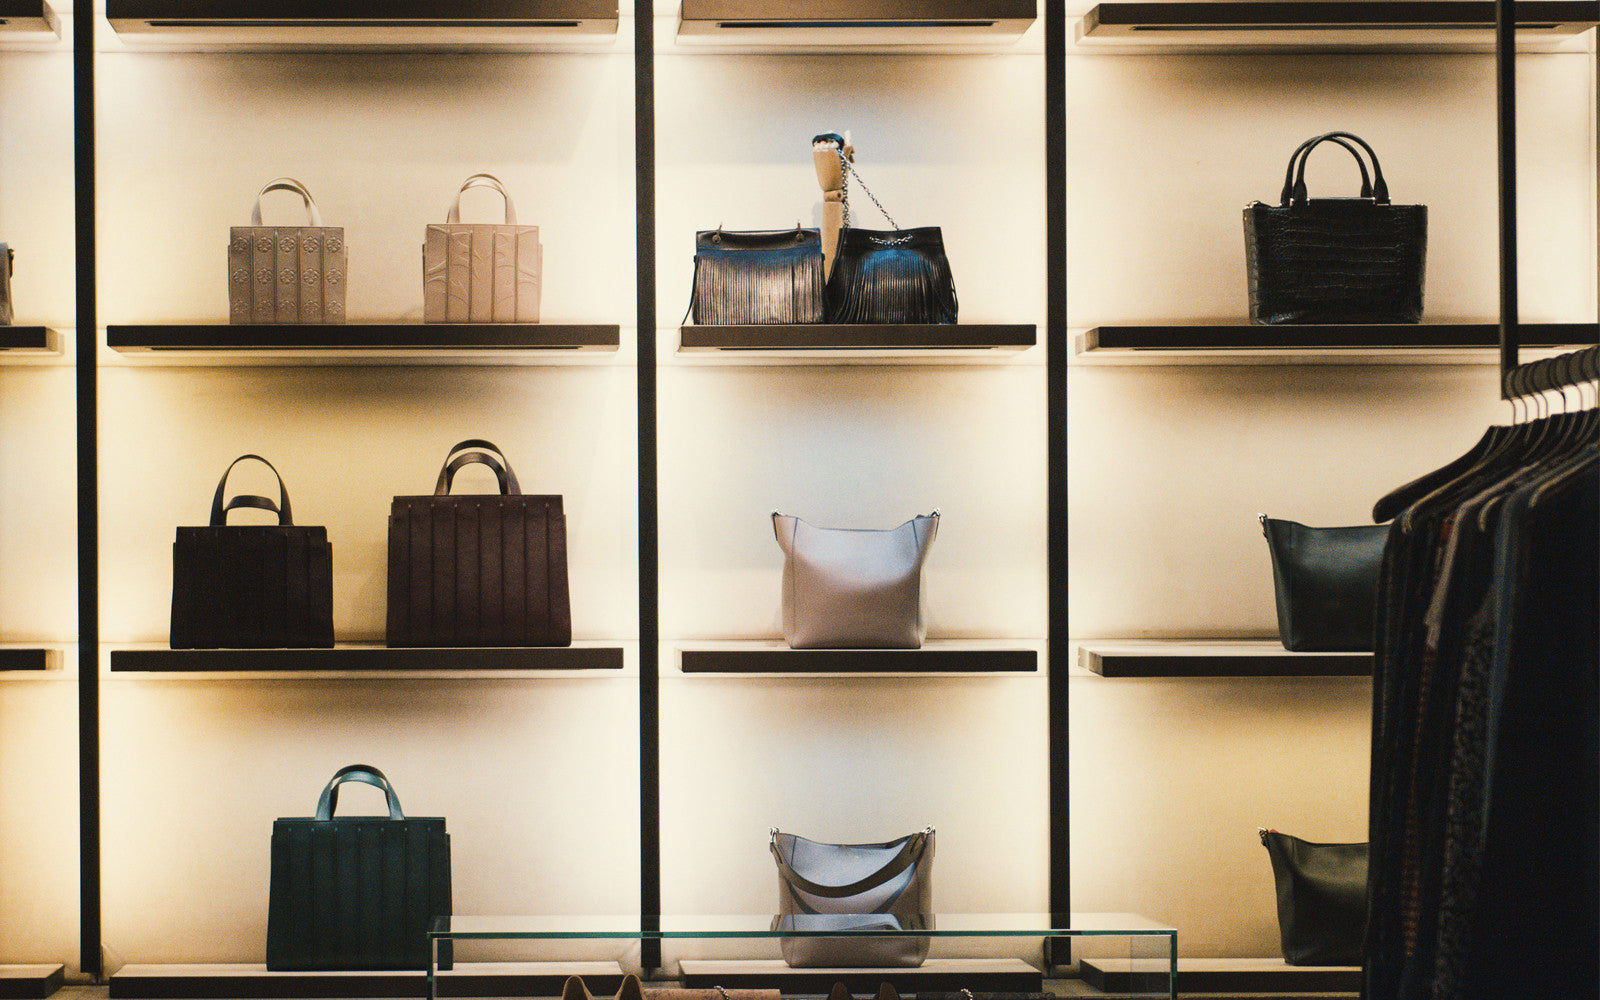 The array of gorgeous handbags